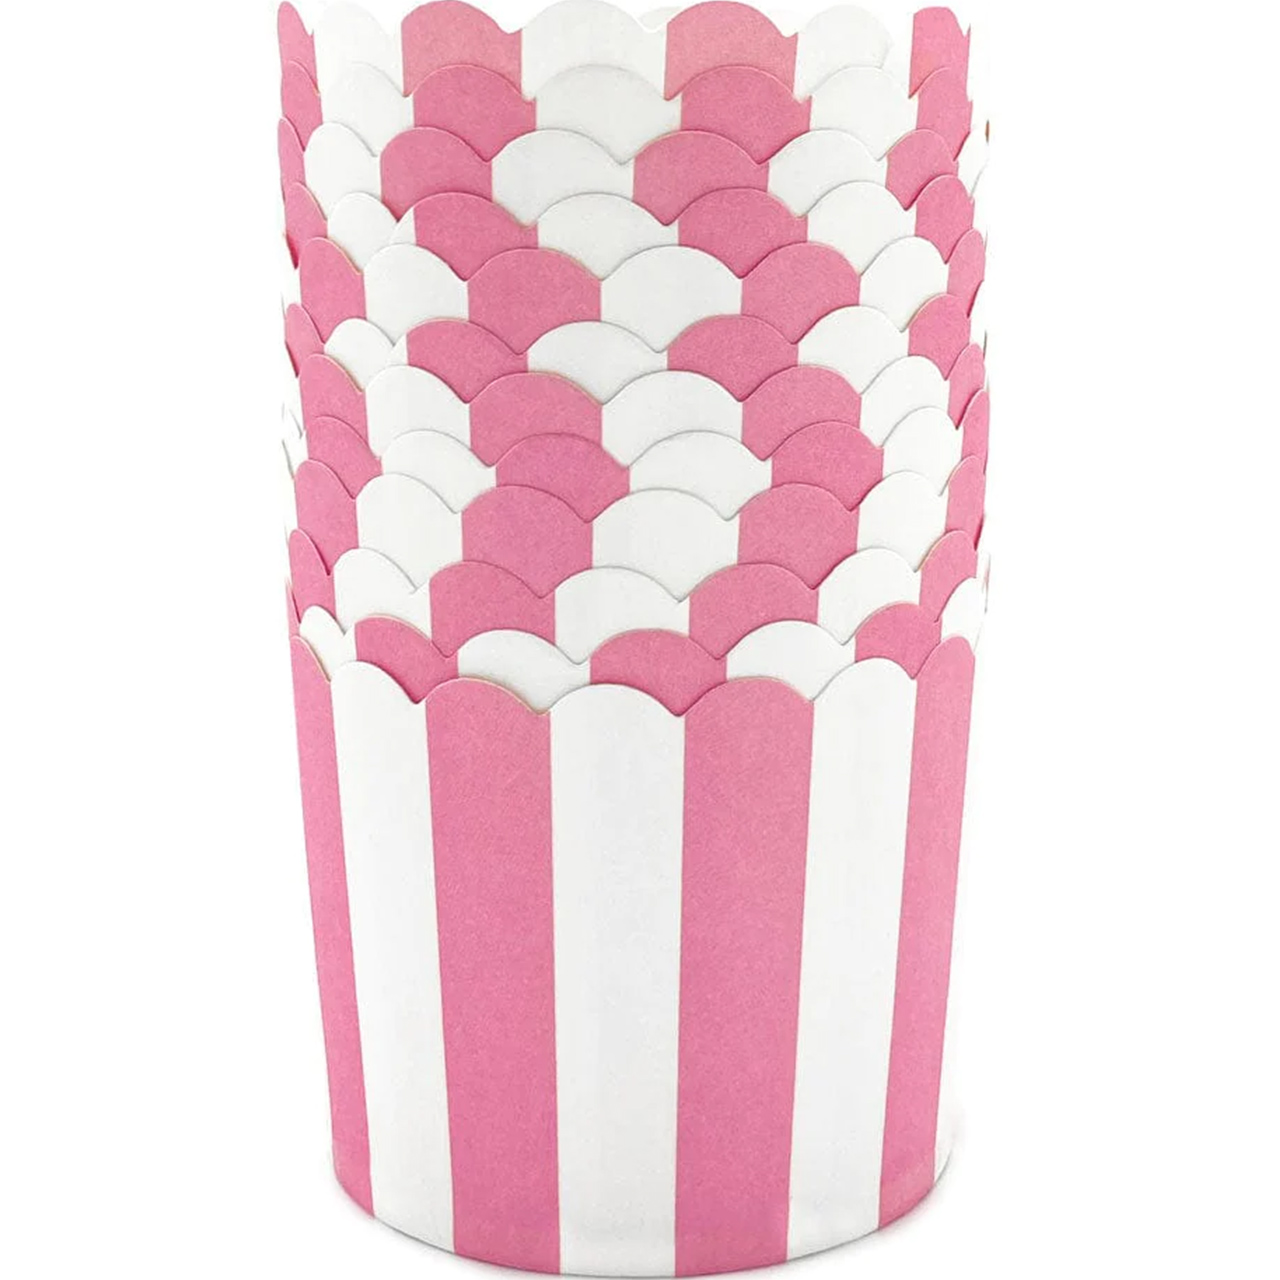 Cupcake-Formen - Pink and White